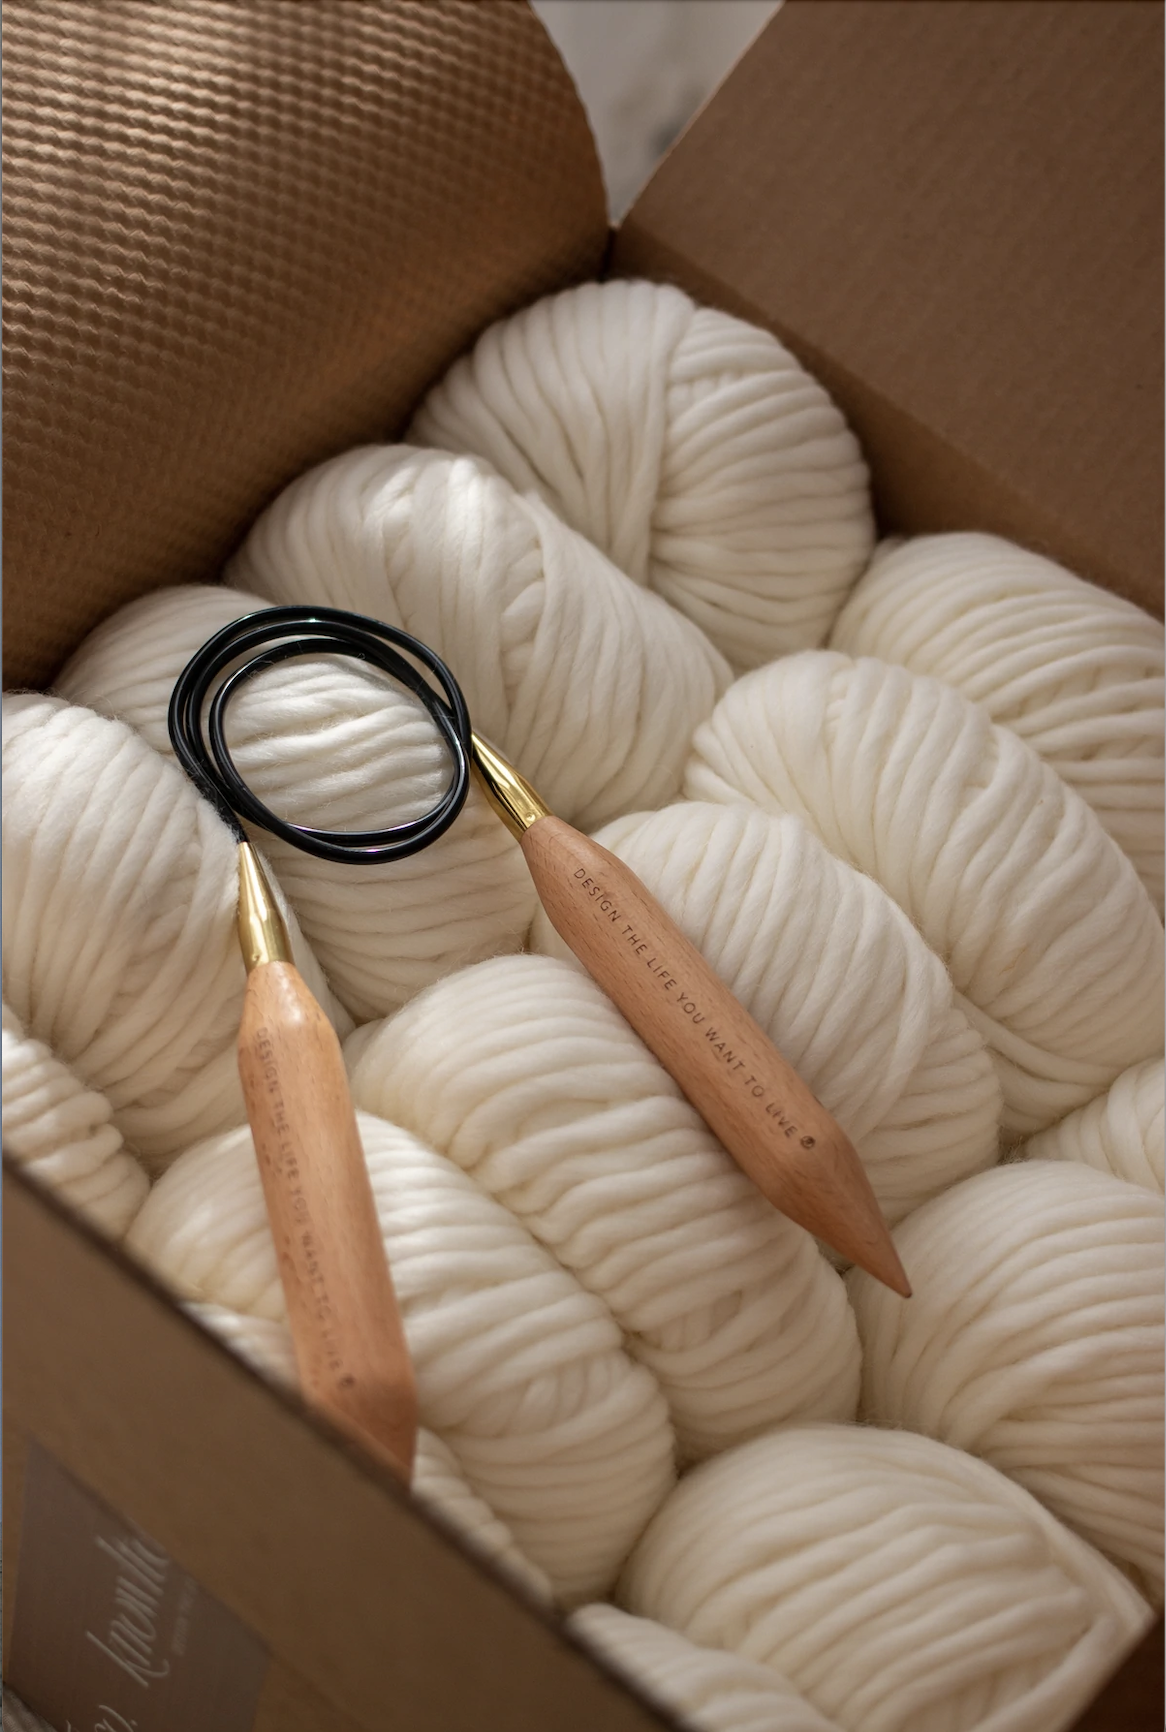 Free chunky knit blanket pattern using circular birch knitting needles 